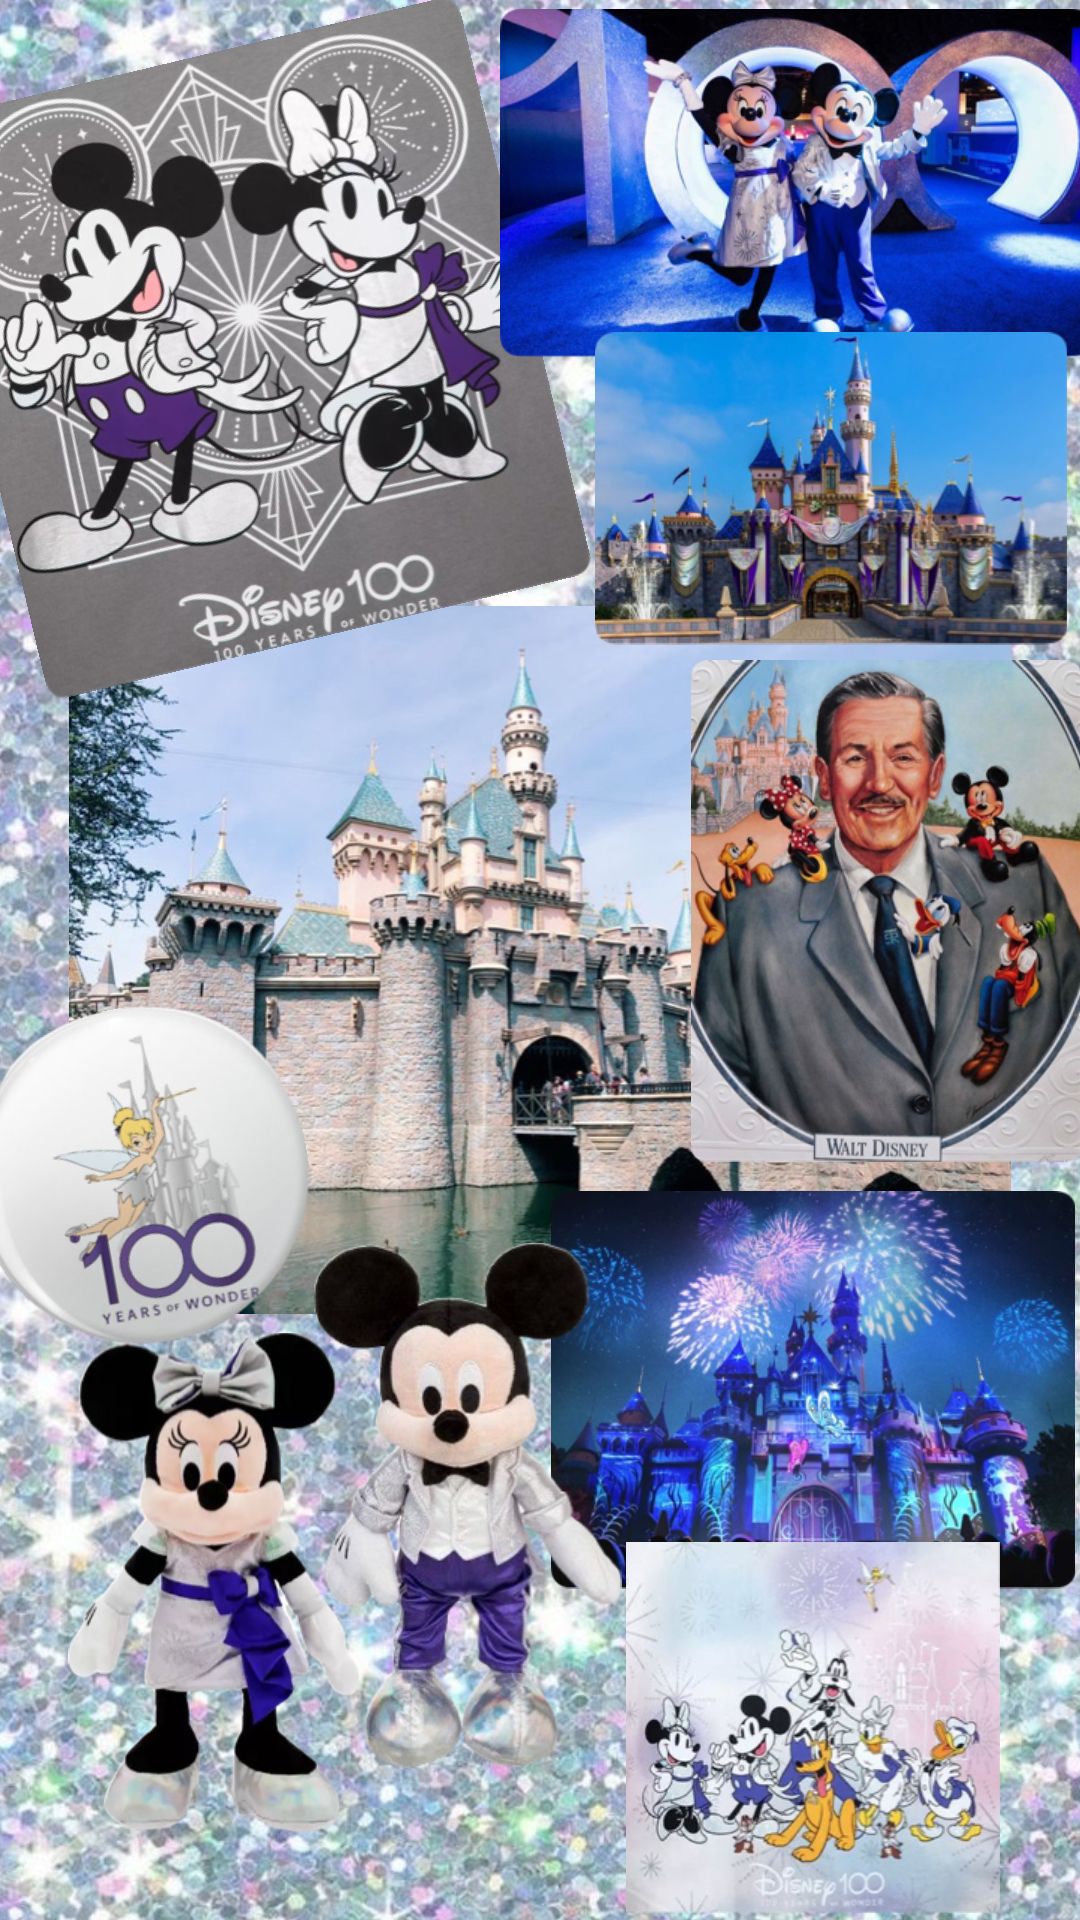 Disney 100 (Years of Wonder) ✨✨ #disney #disneyaesthetic #disneyland #disneyparks #vintage #vintageaesthetic #vintagedi. Disney art, Cute disney wallpaper, Disney